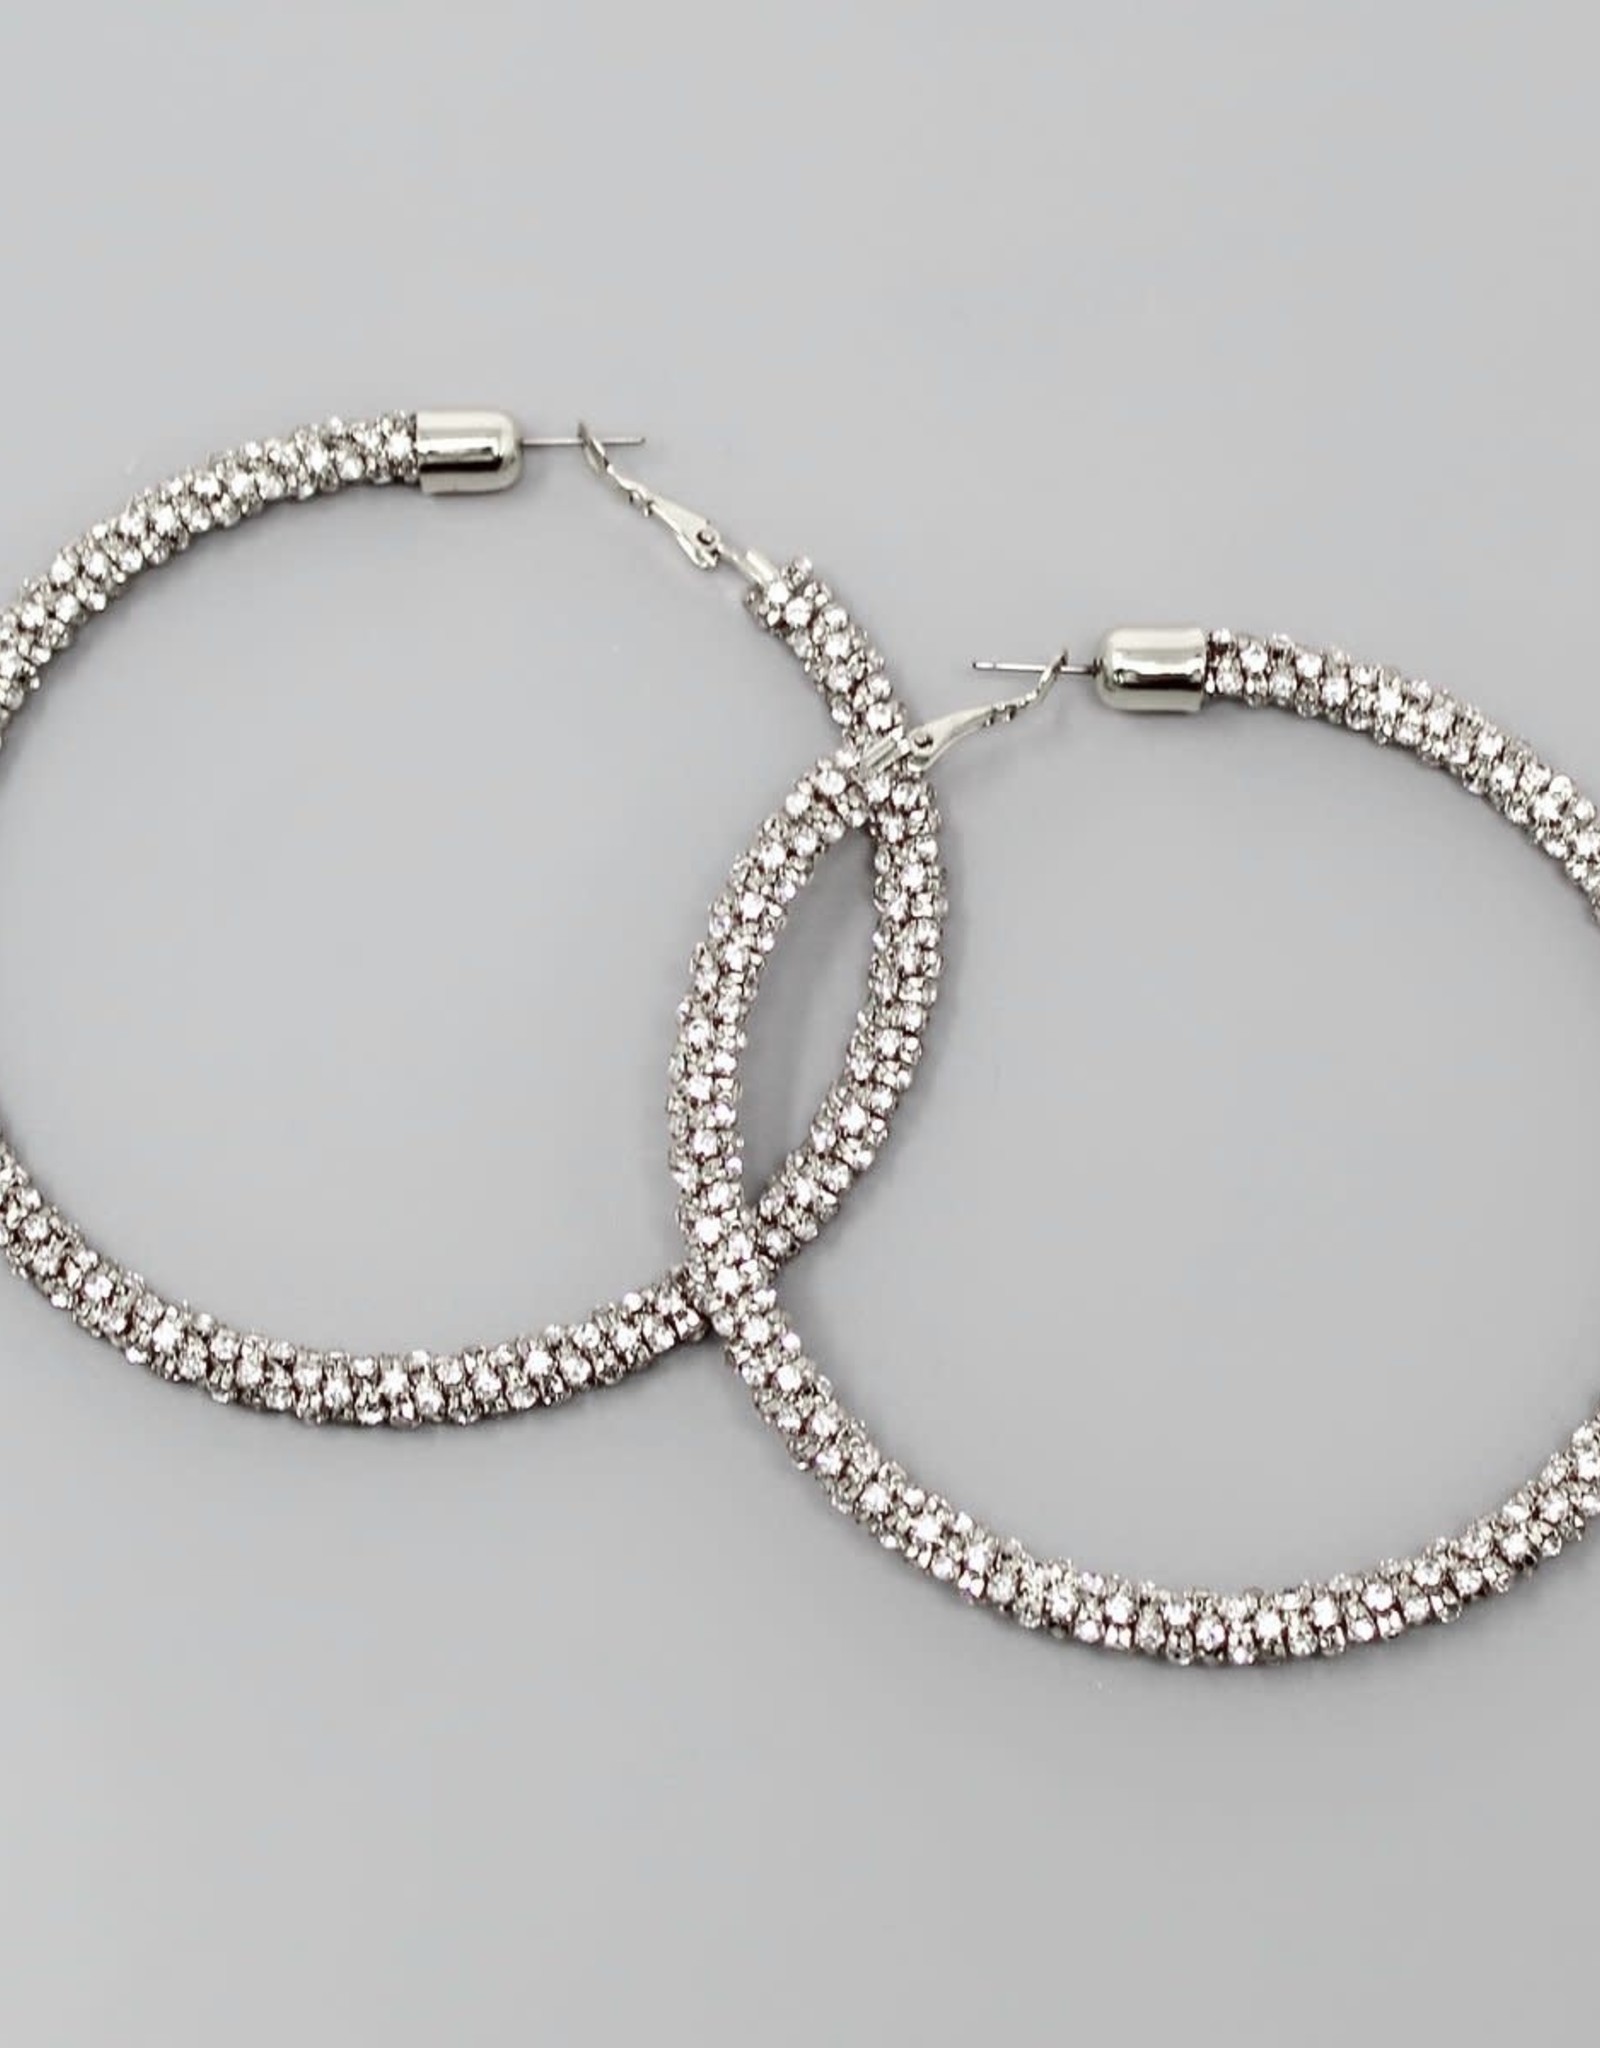 Rhinestone Chain Wrapped Hoop Earrings (80mm) - Silver